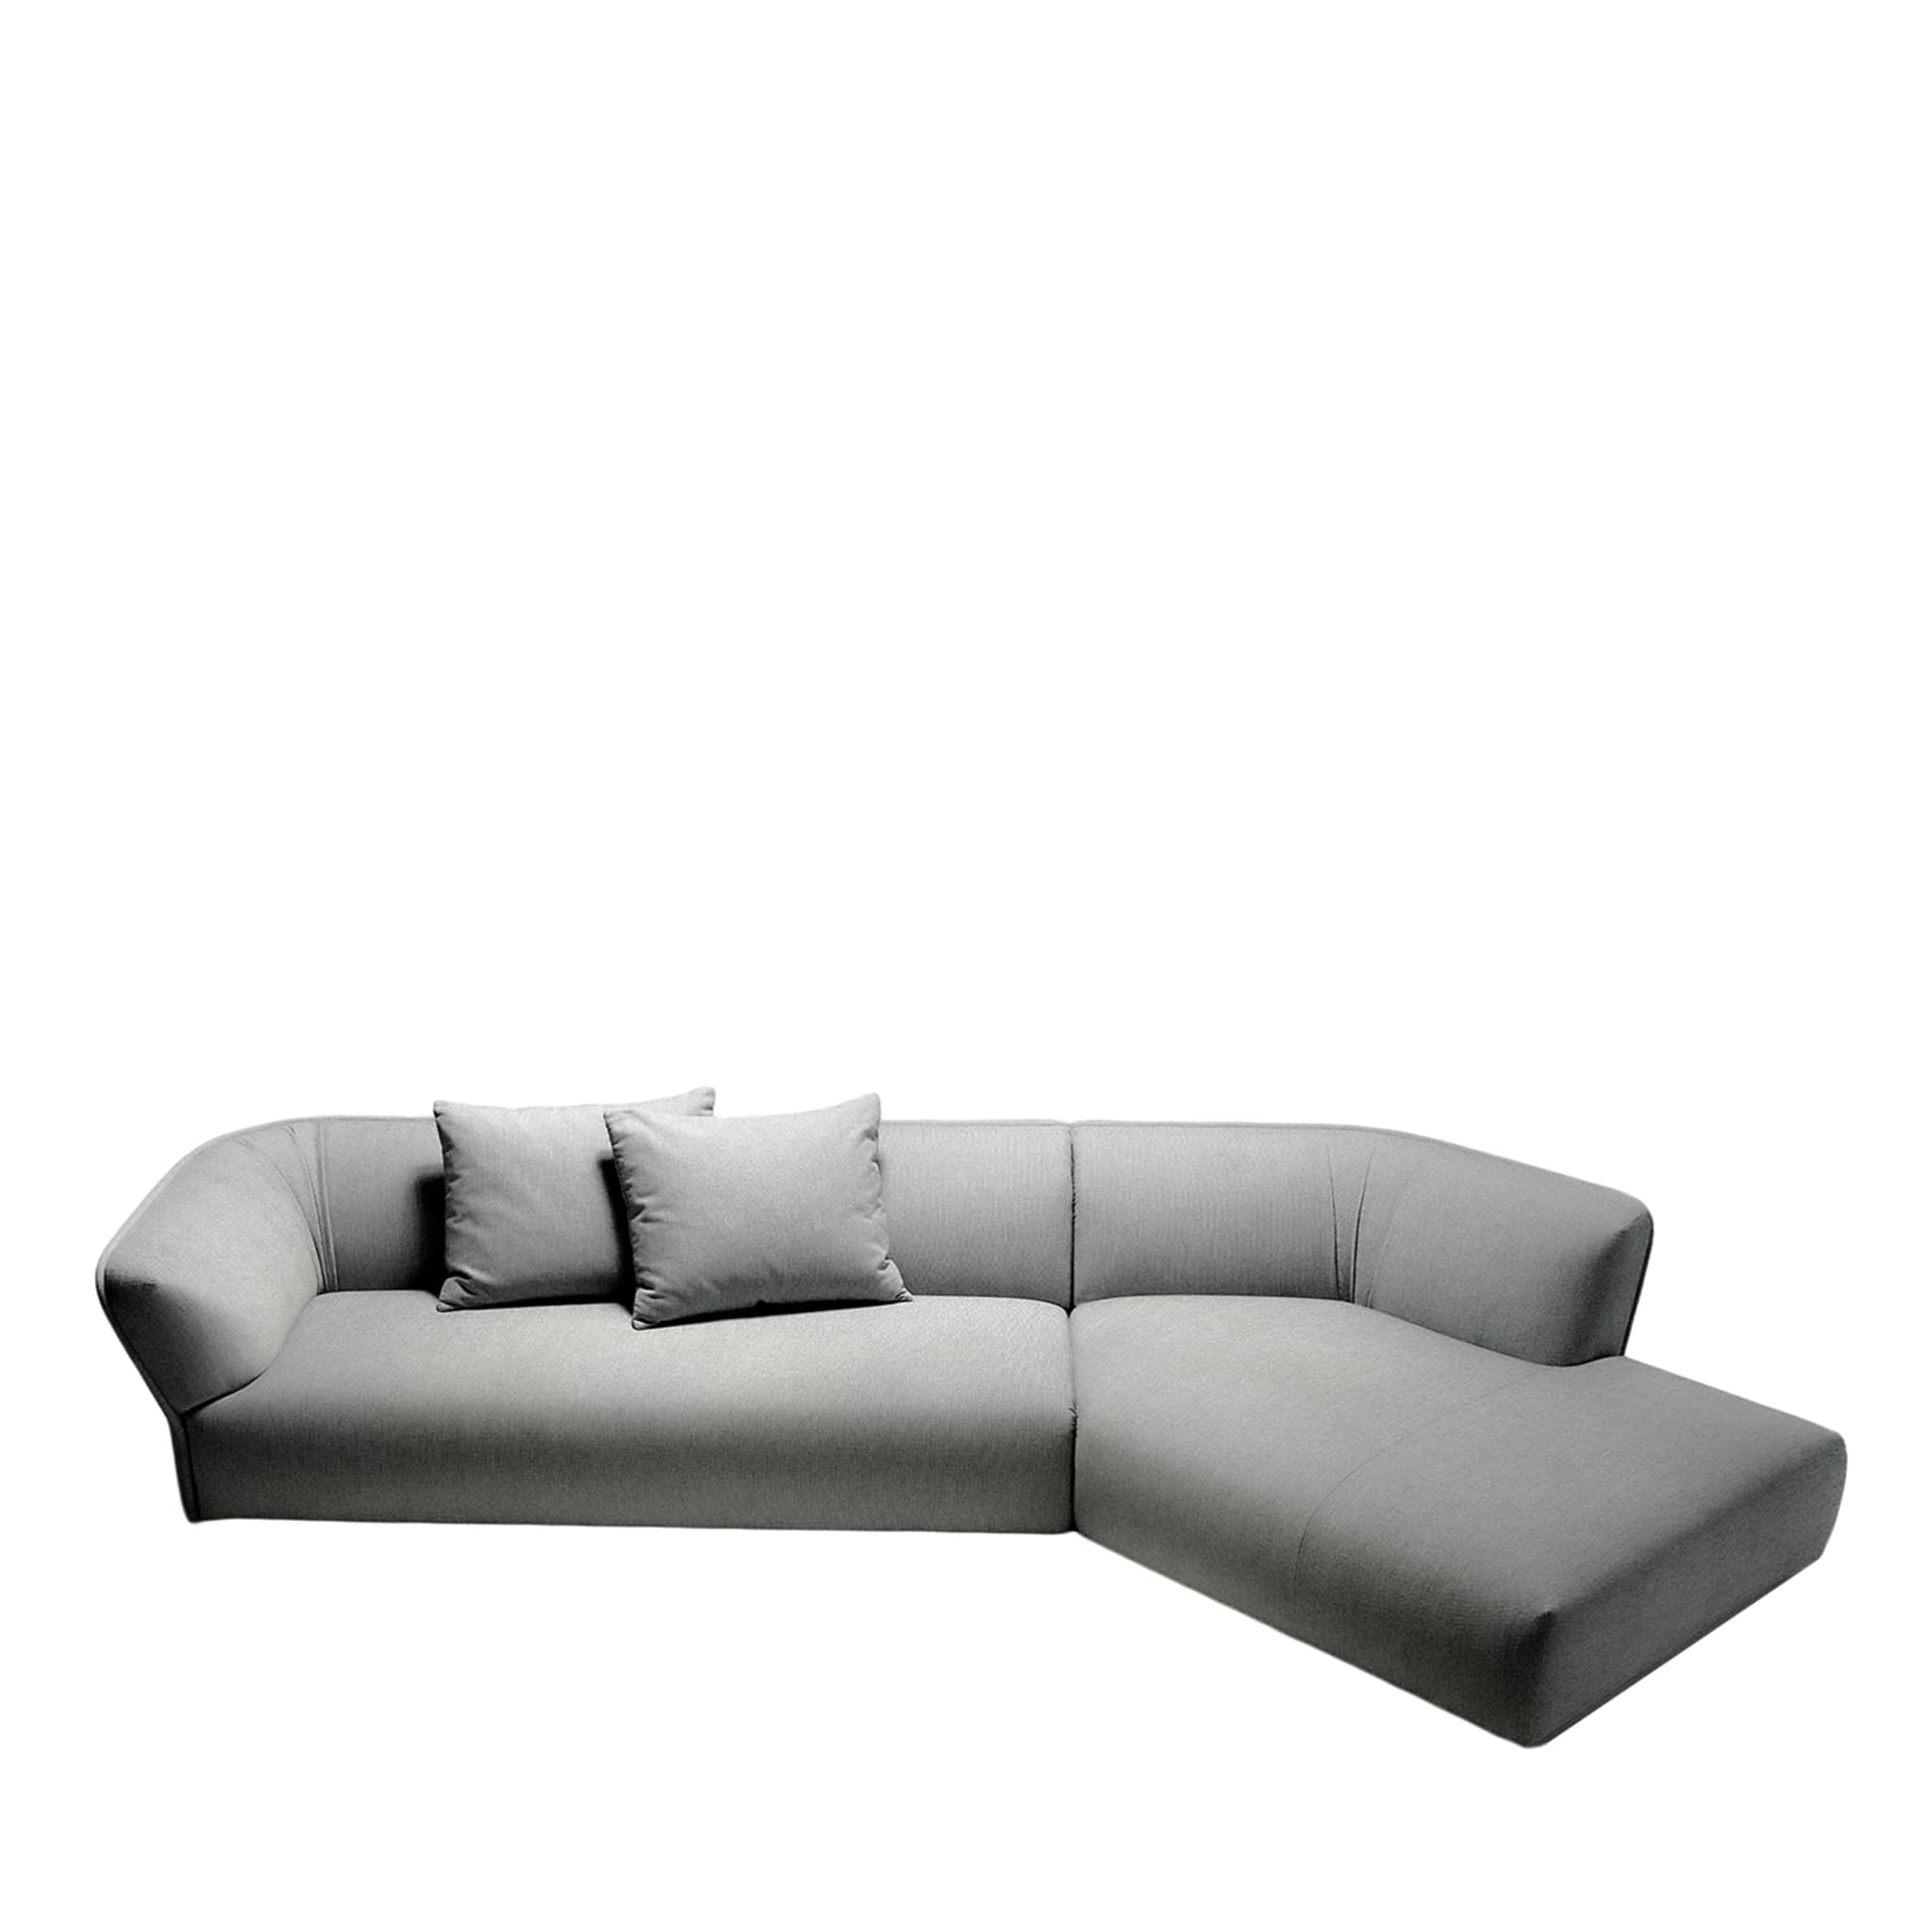 Florence Modulares graues Sofa in Winkelform von Ludovica + Roberto Palomba - Hauptansicht